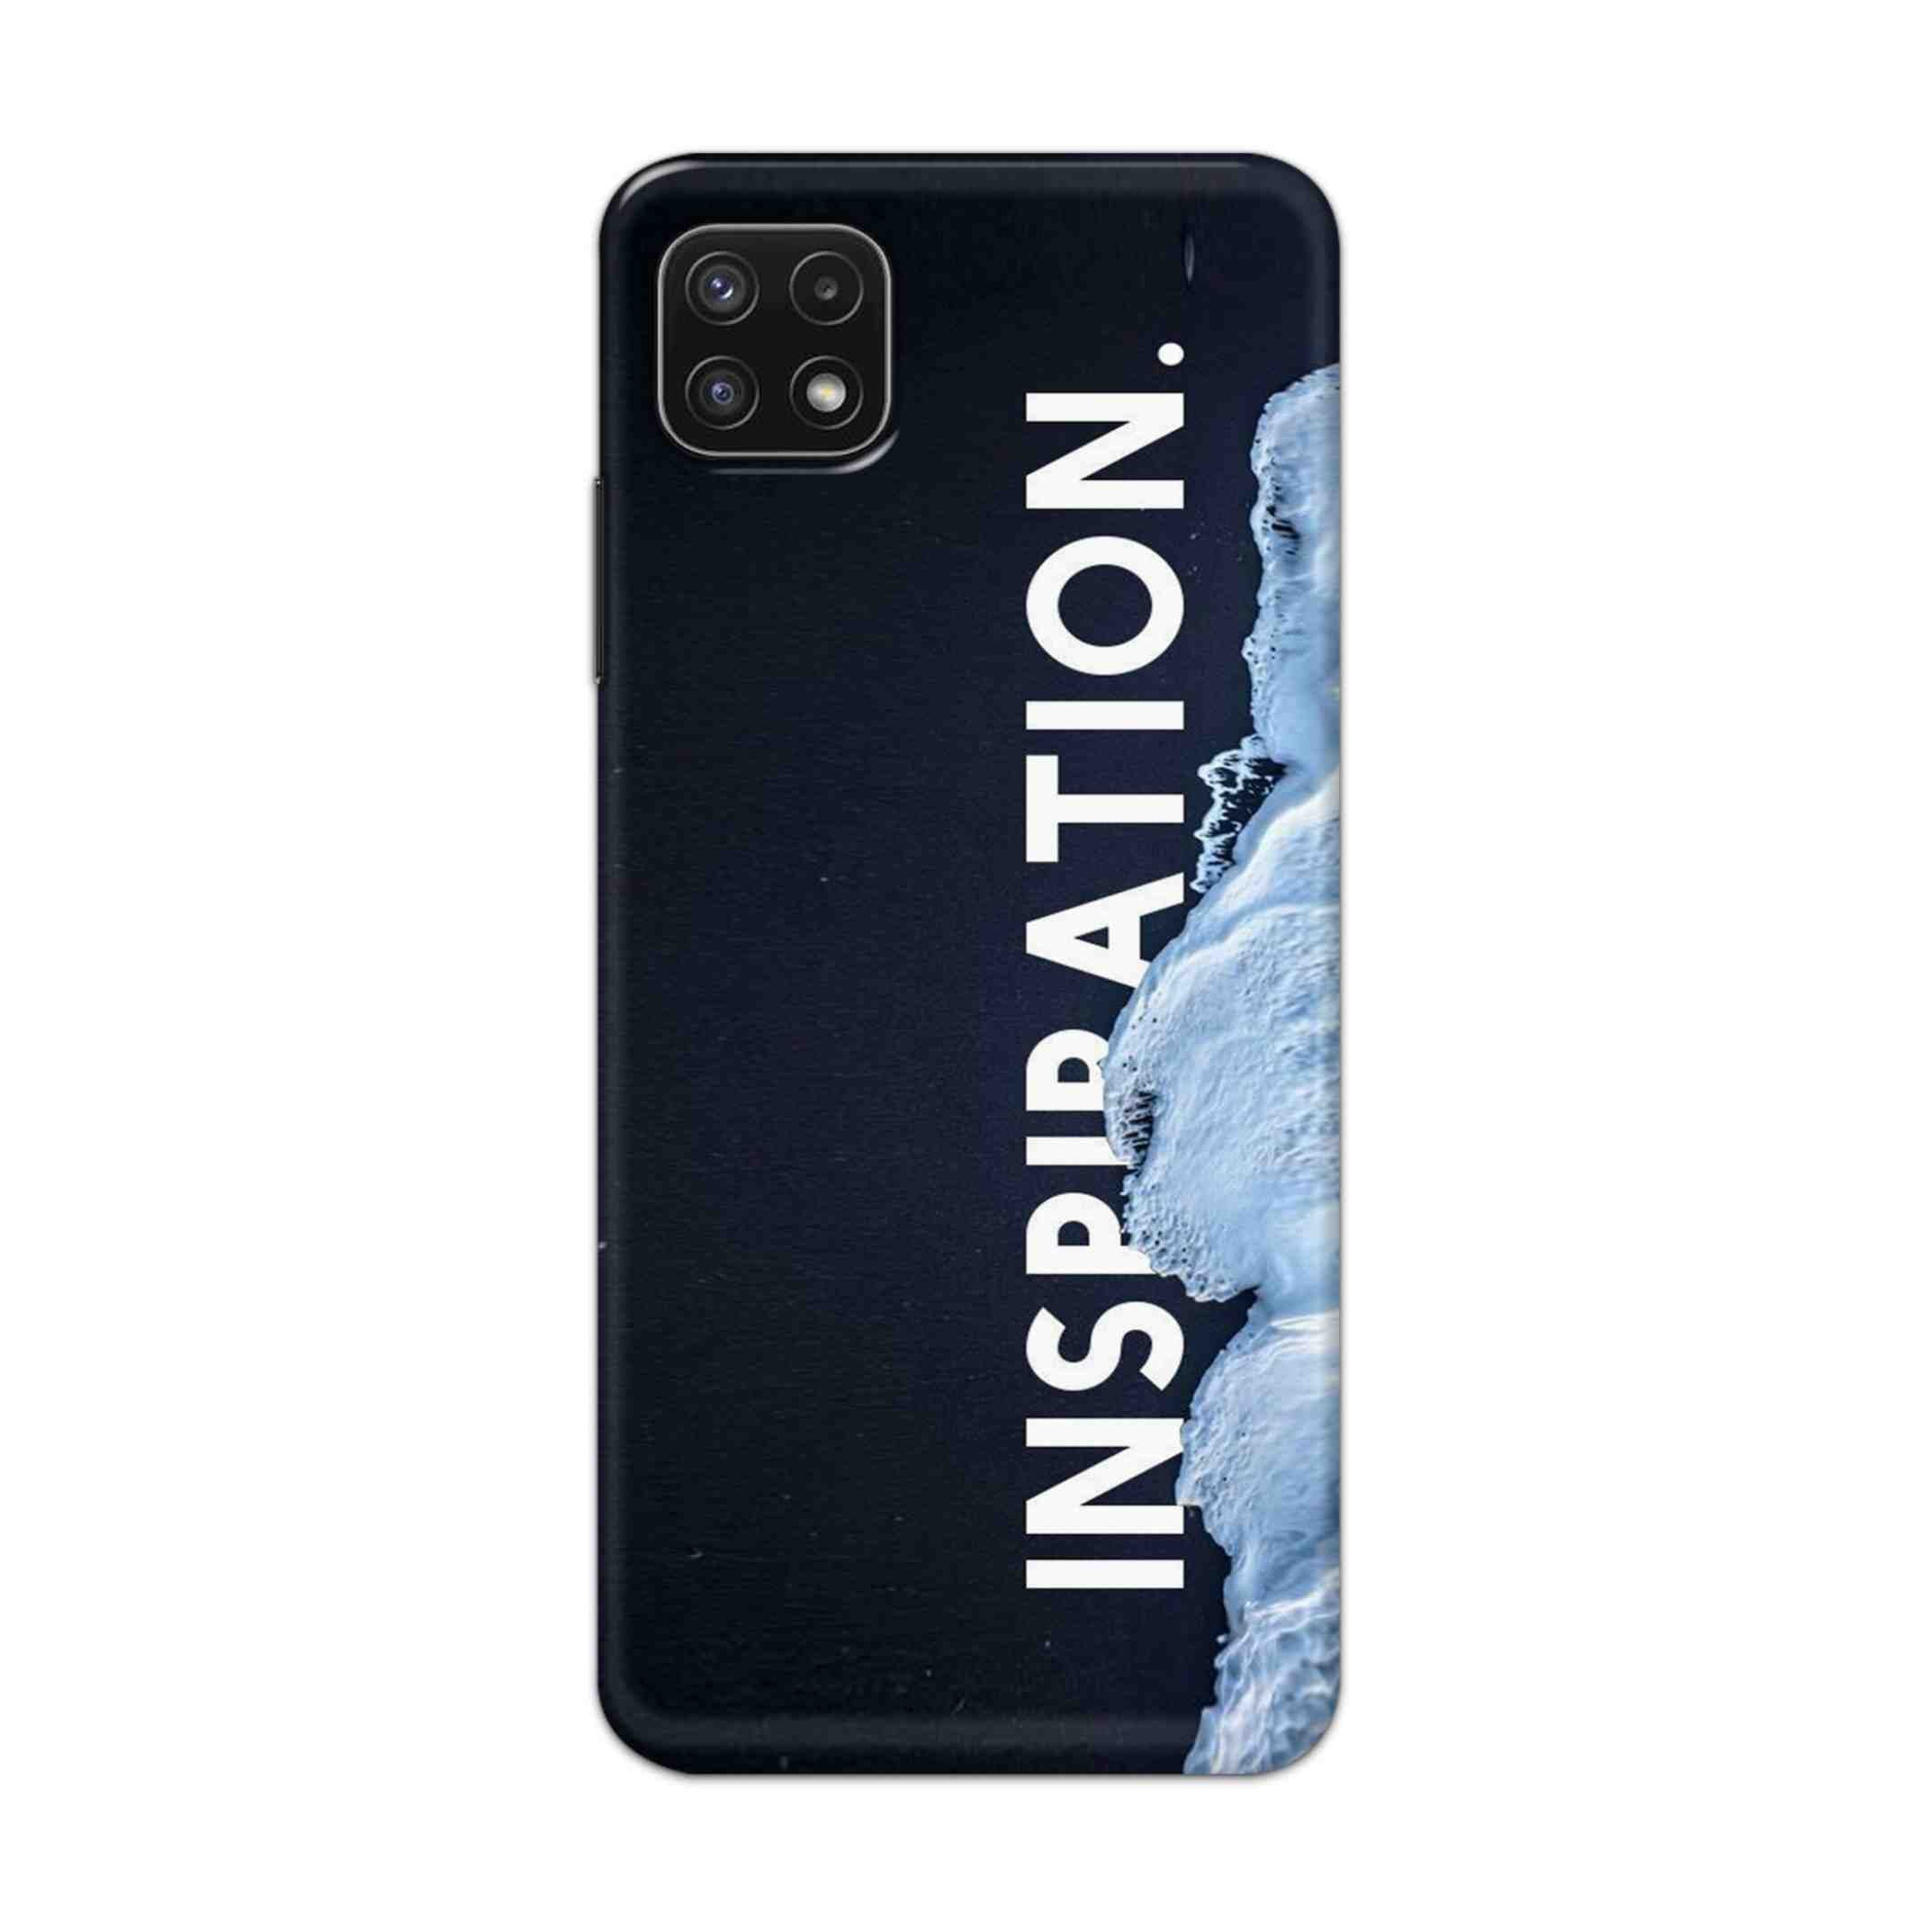 Buy Inspiration Hard Back Mobile Phone Case Cover For Samsung A22 5G Online